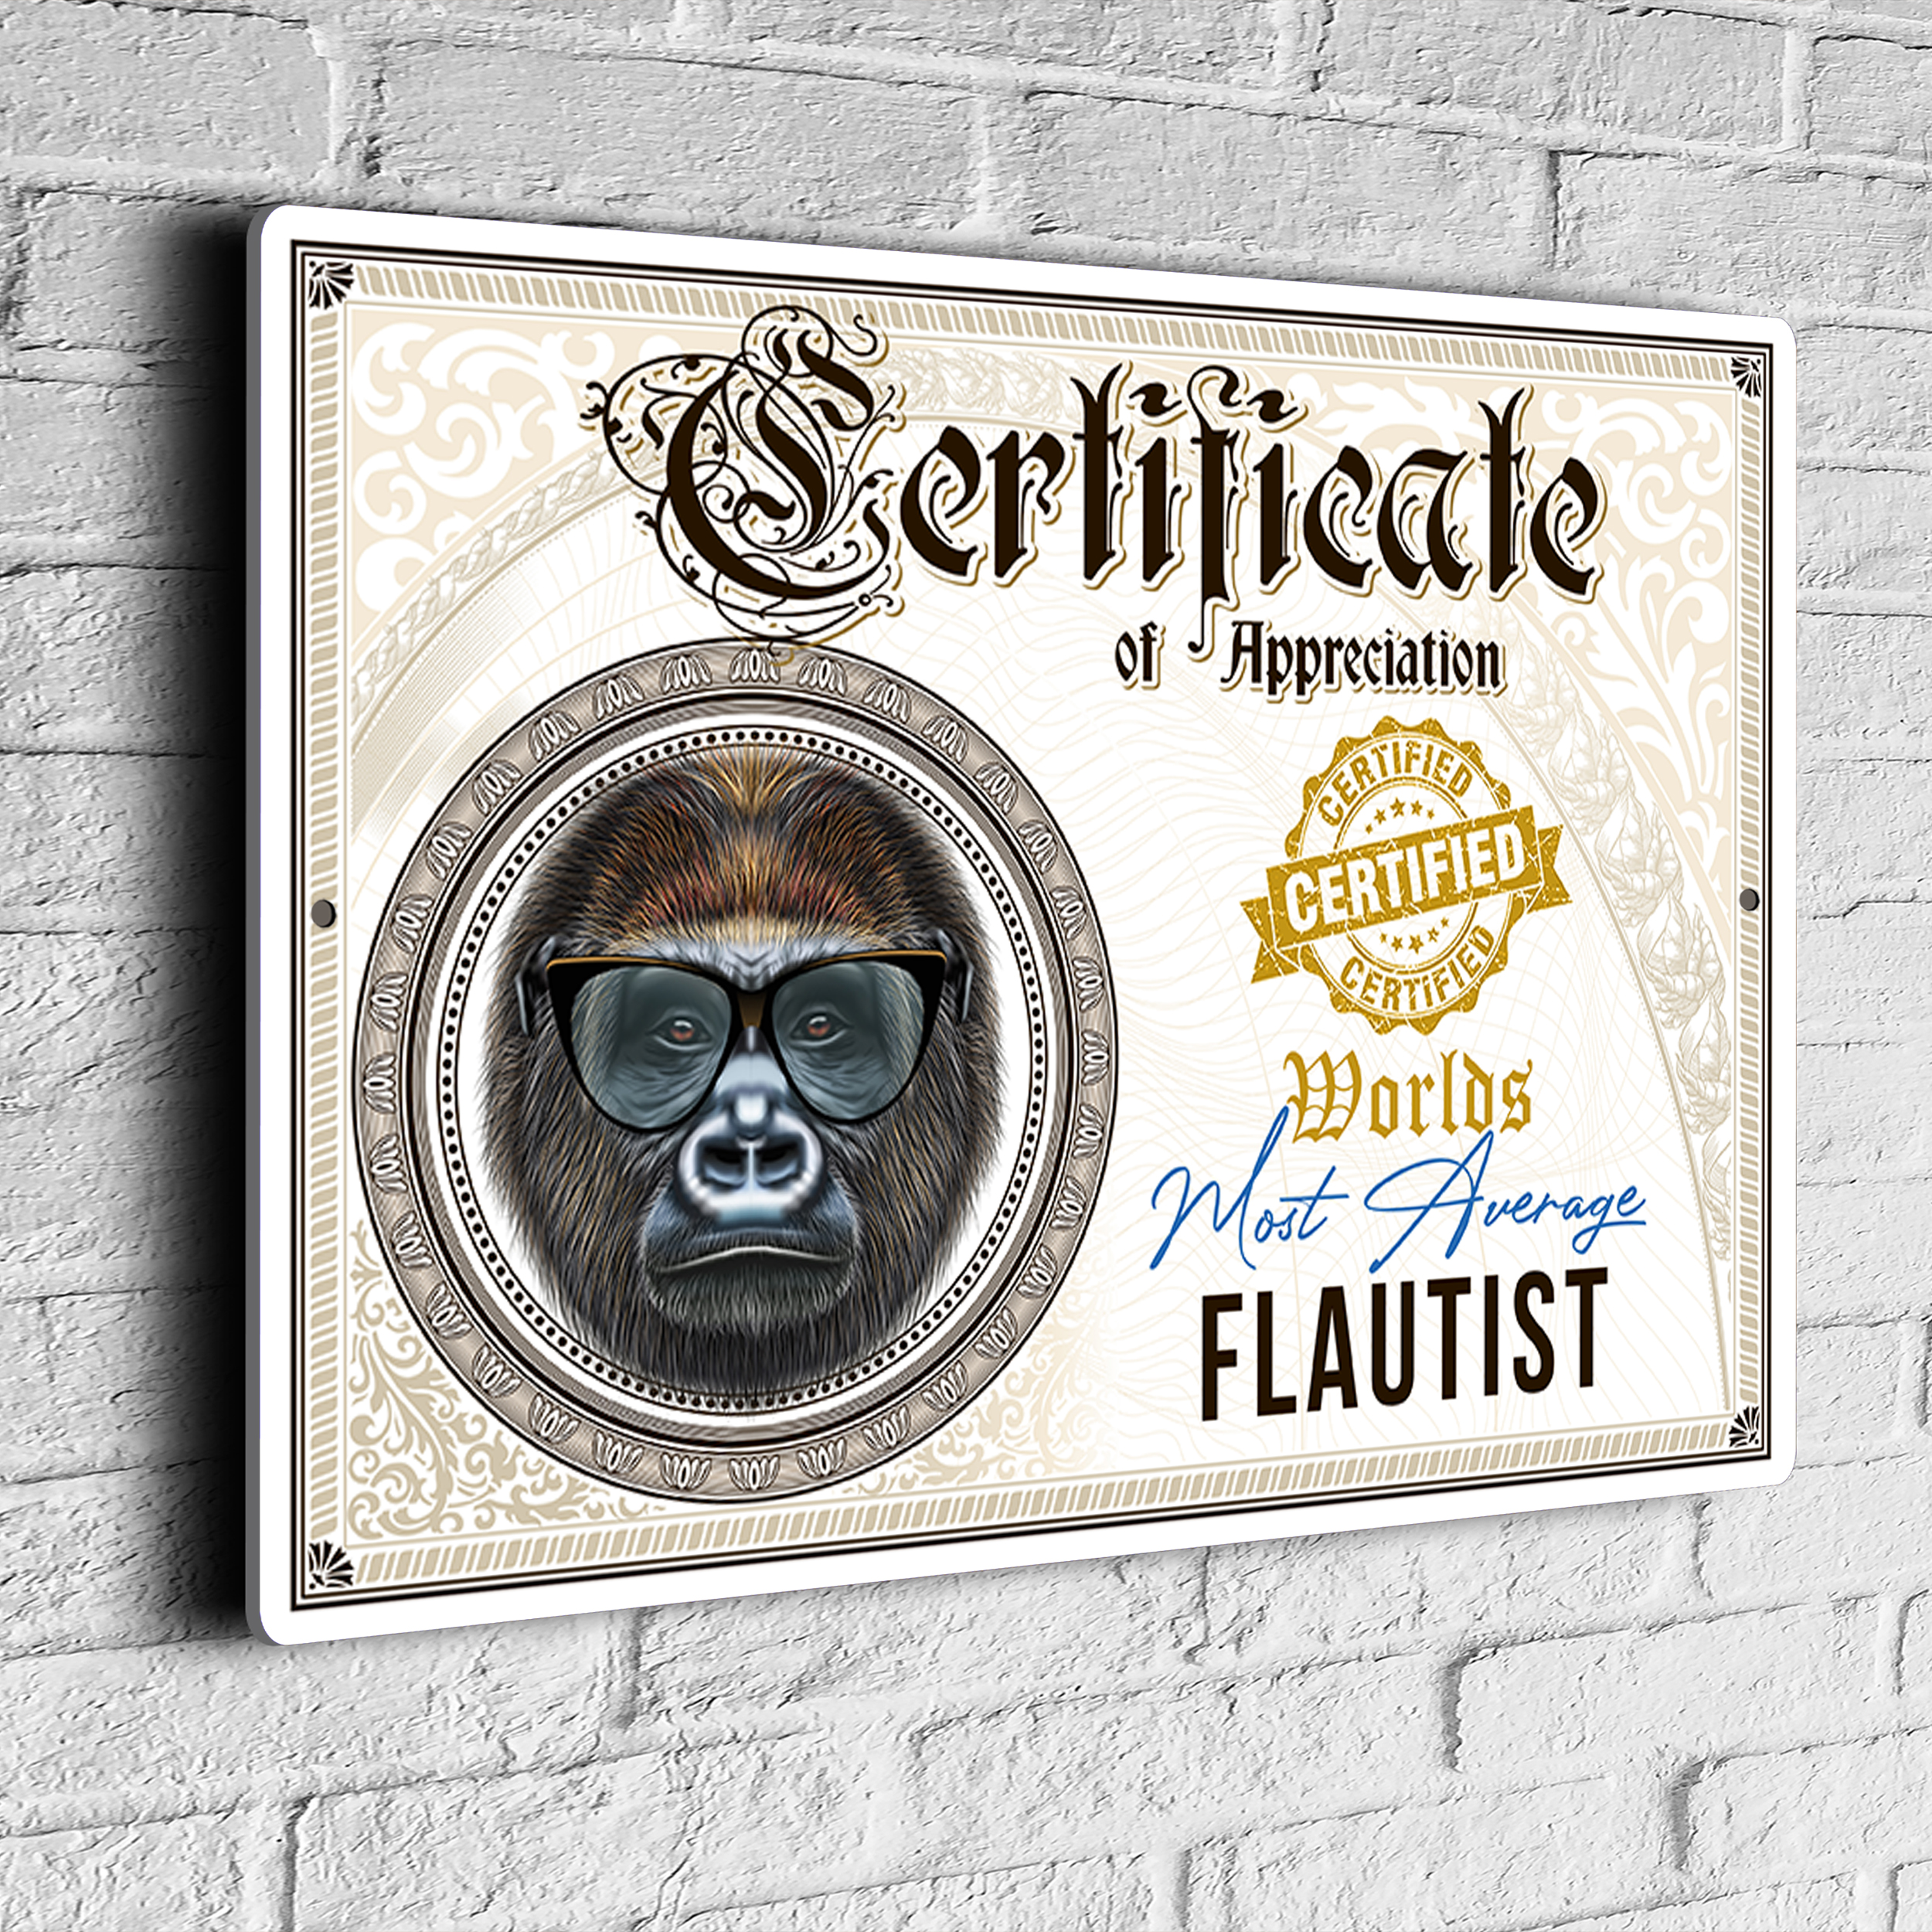 Fun Flautist Certificate